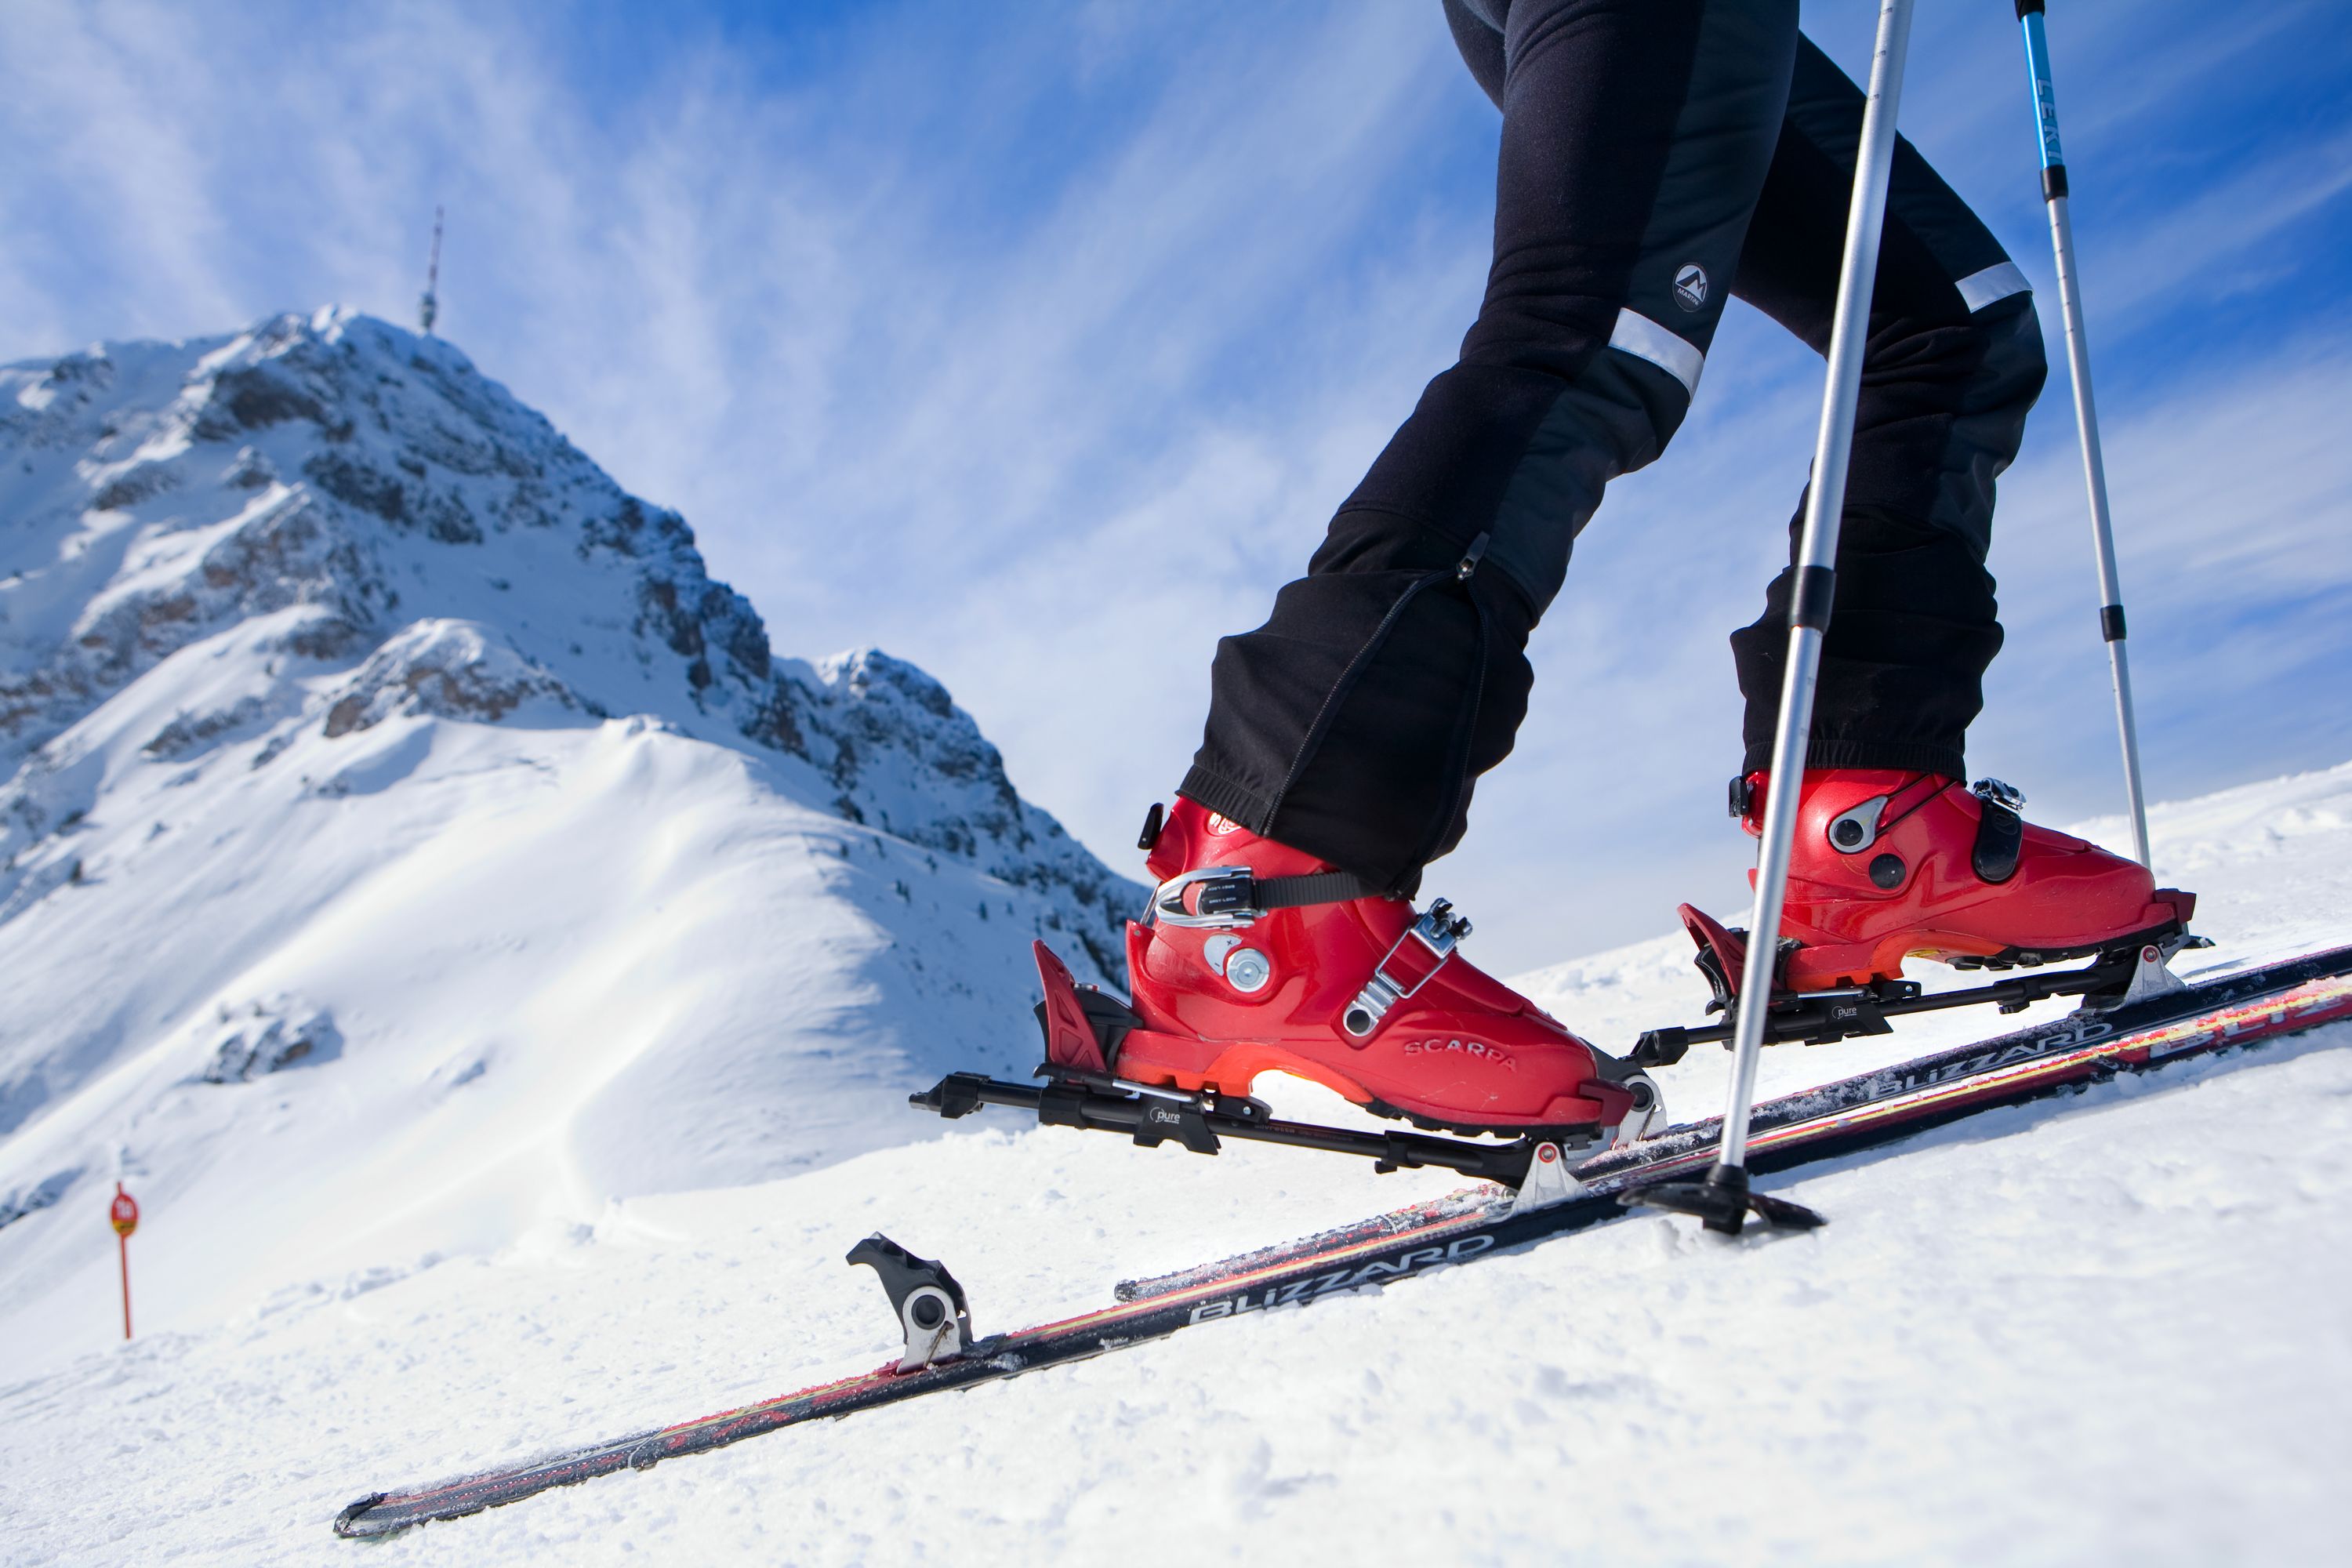 Ski n. Ски туринг. Скитур лыжи. Лыжи для ски альпинизма. Горные лыжи для скитура.